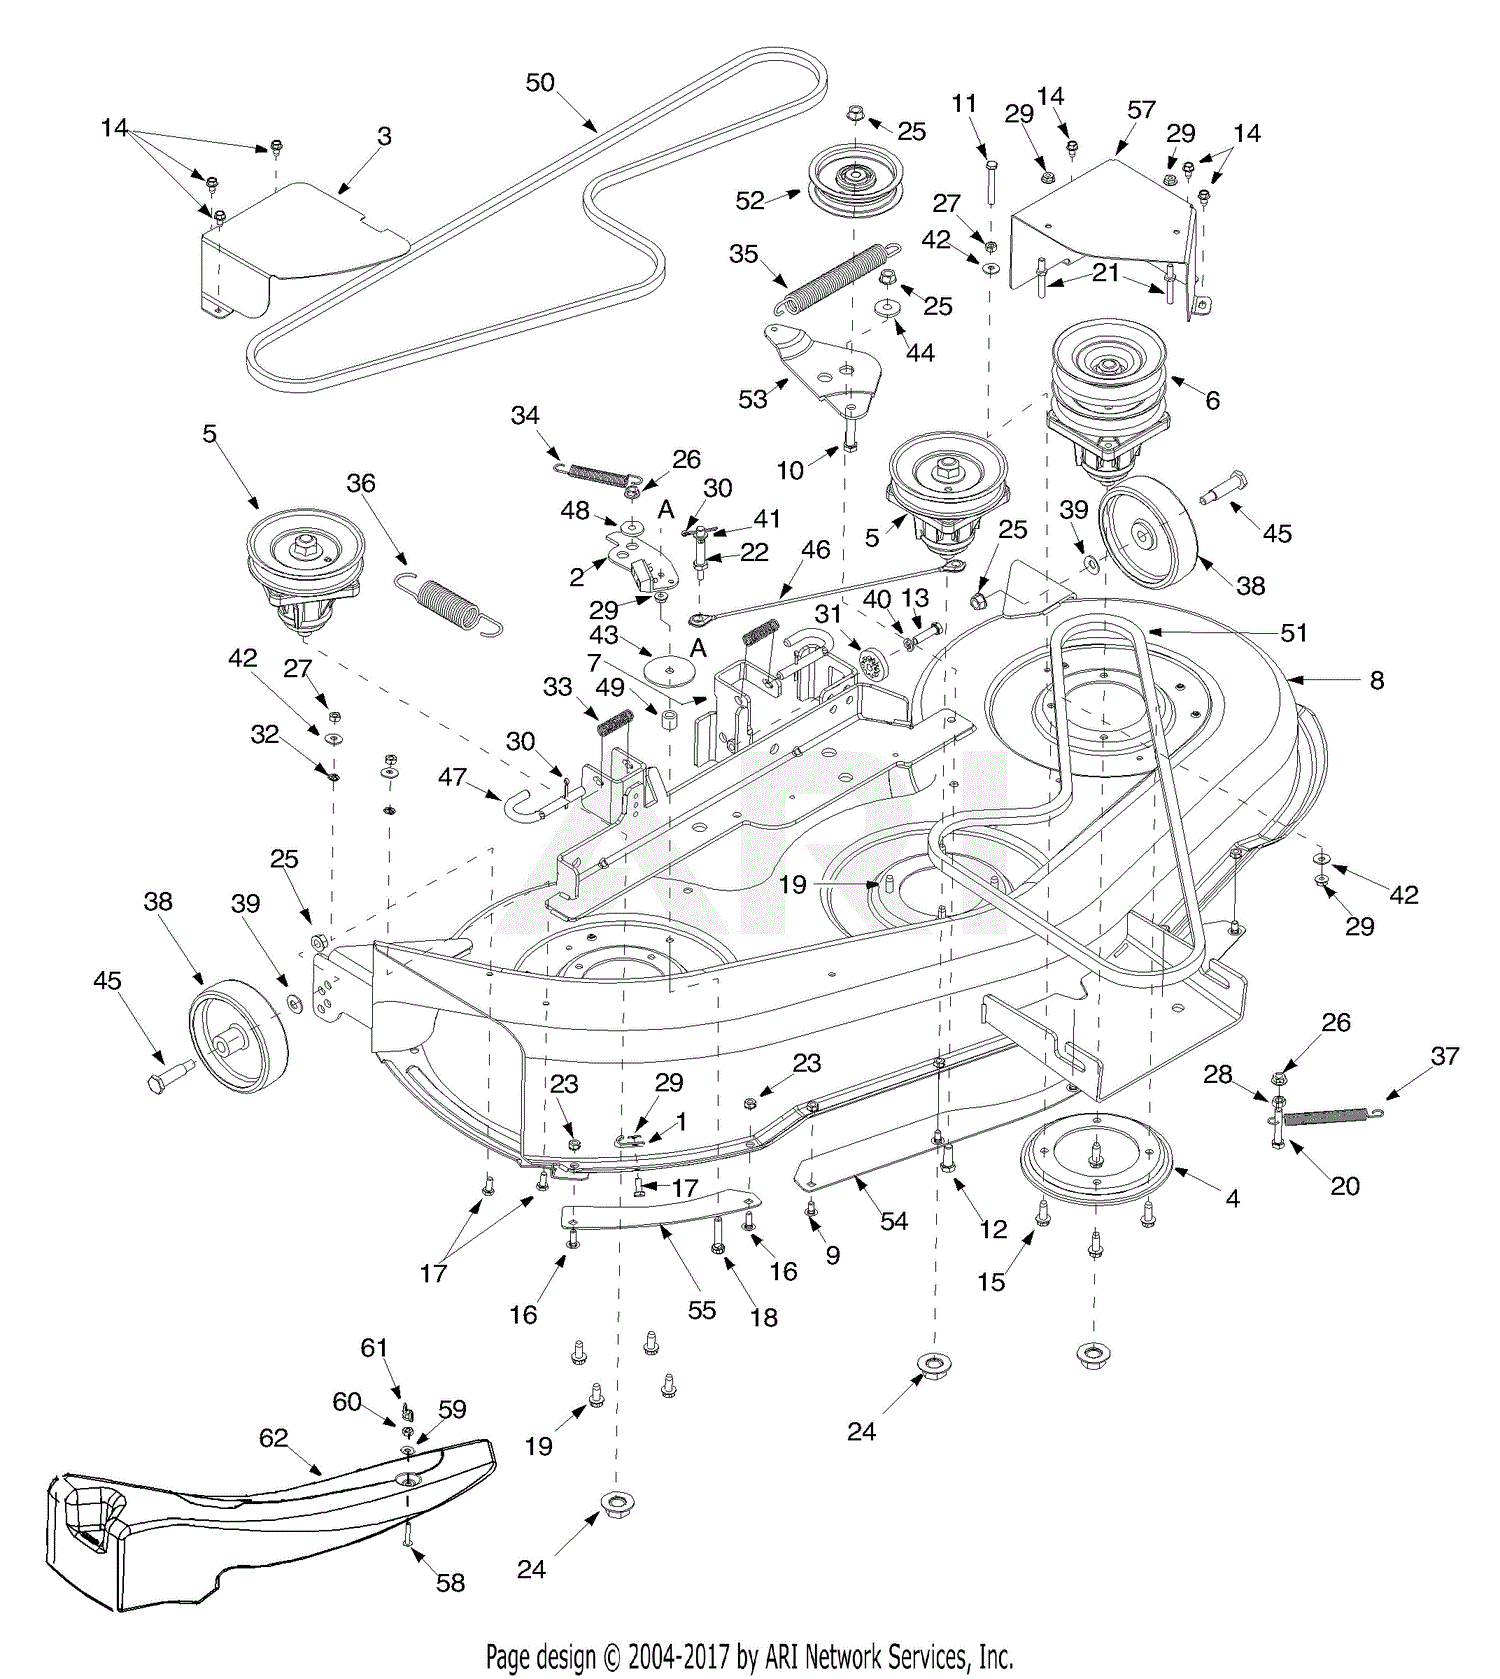 [DIAGRAM] Wiring Diagram For Troy Bilt Riding Mower - MYDIAGRAM.ONLINE